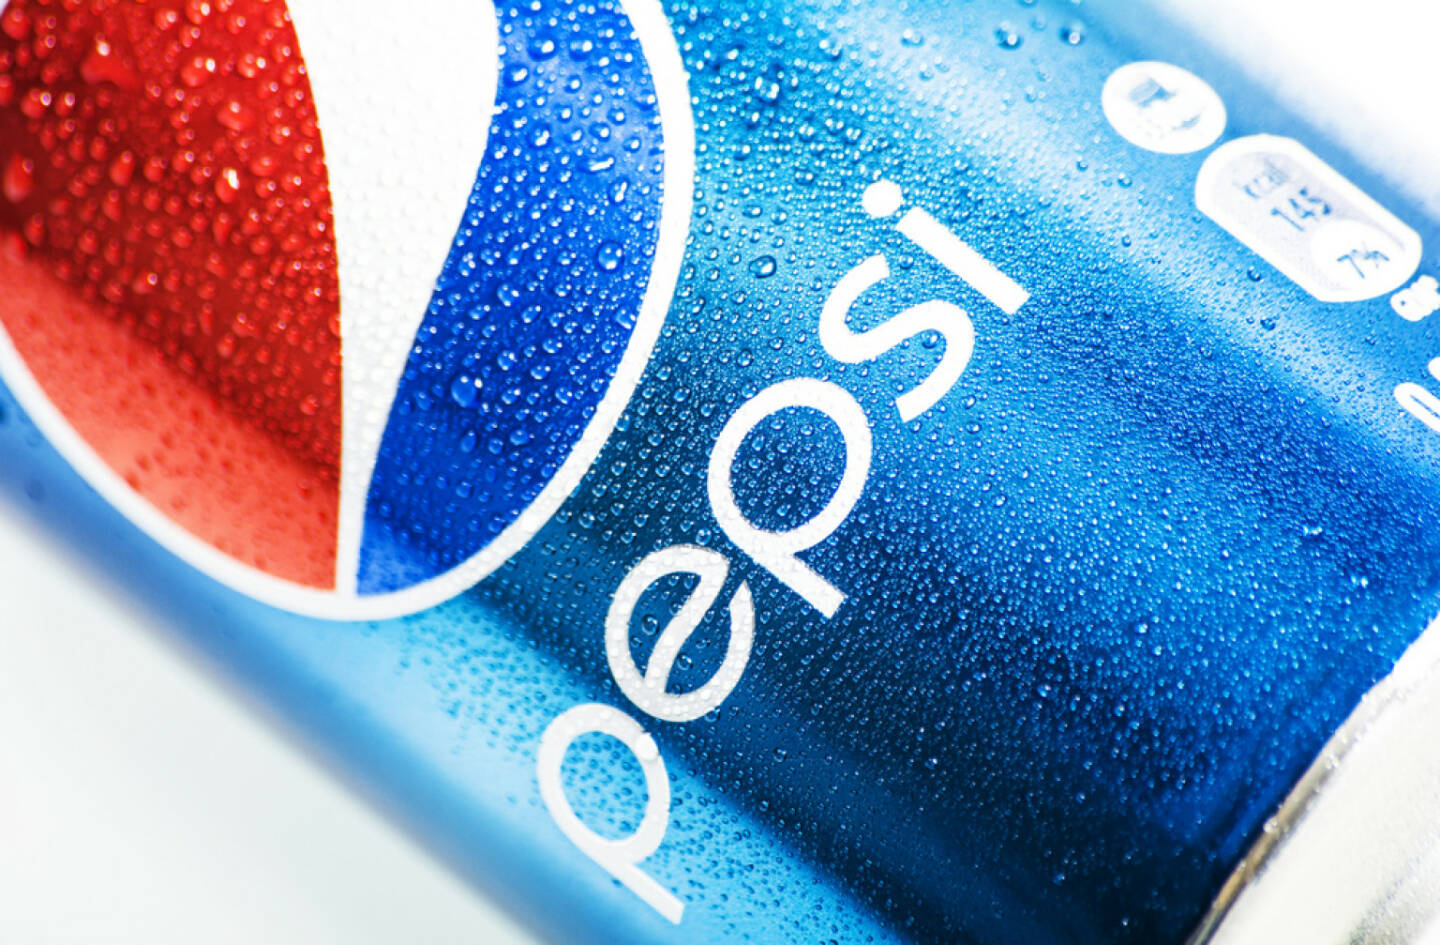 Pepsi Cola, <a href=http://www.shutterstock.com/gallery-809503p1.html?cr=00&pl=edit-00>Twin Design</a> / <a href=http://www.shutterstock.com/editorial?cr=00&pl=edit-00>Shutterstock.com</a>, Twin Design / Shutterstock.com